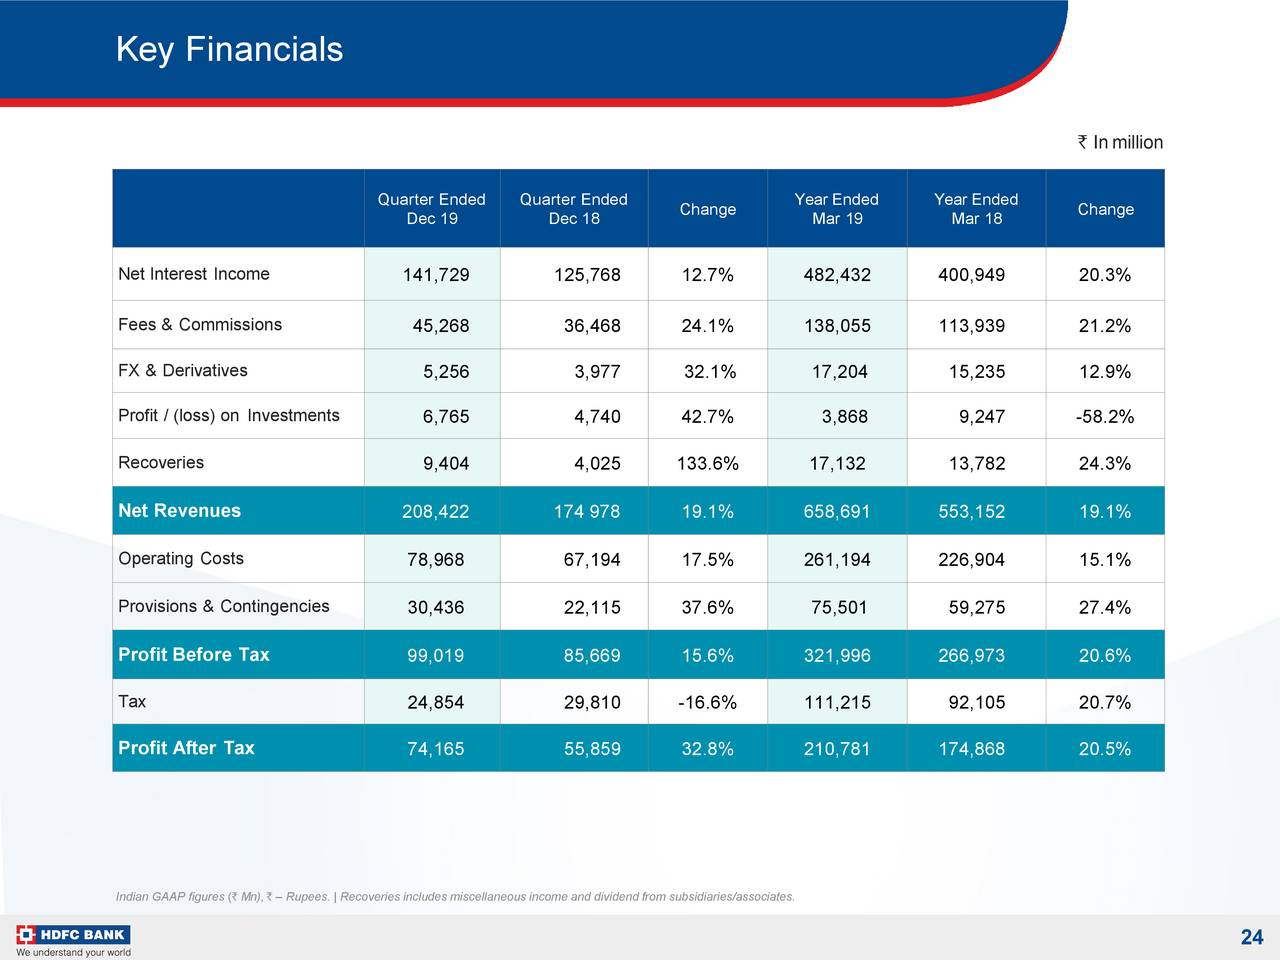 hdfc bank investor presentation pdf